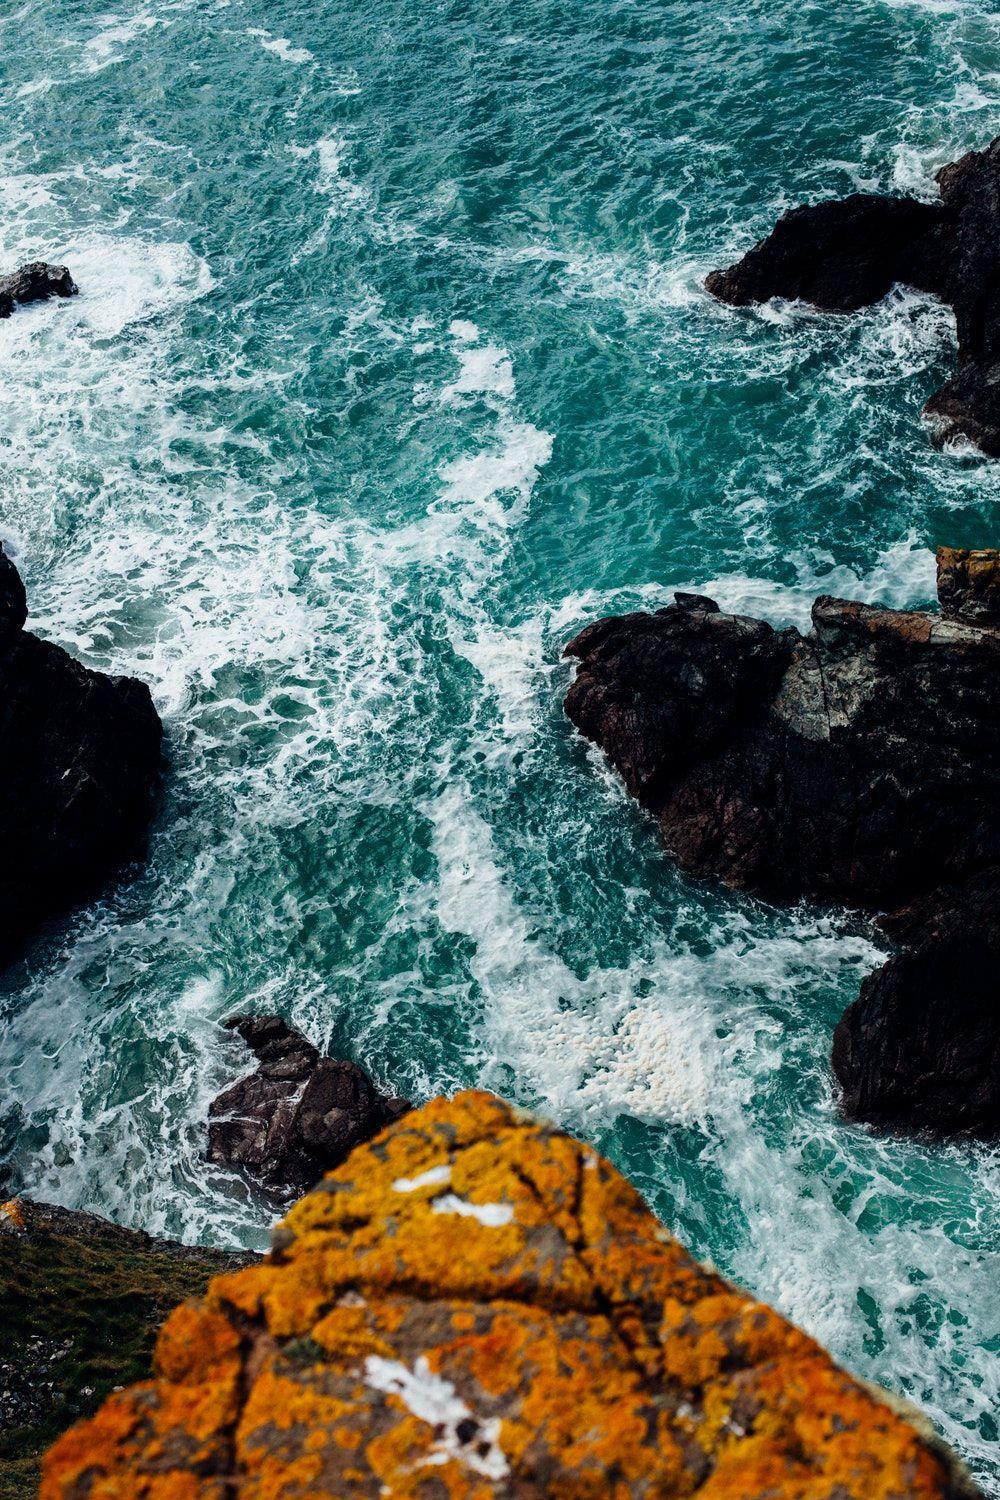 Aesthetic Ocean Laptop Backgrounds / Tumblr Ocean Backgrounds - We Need